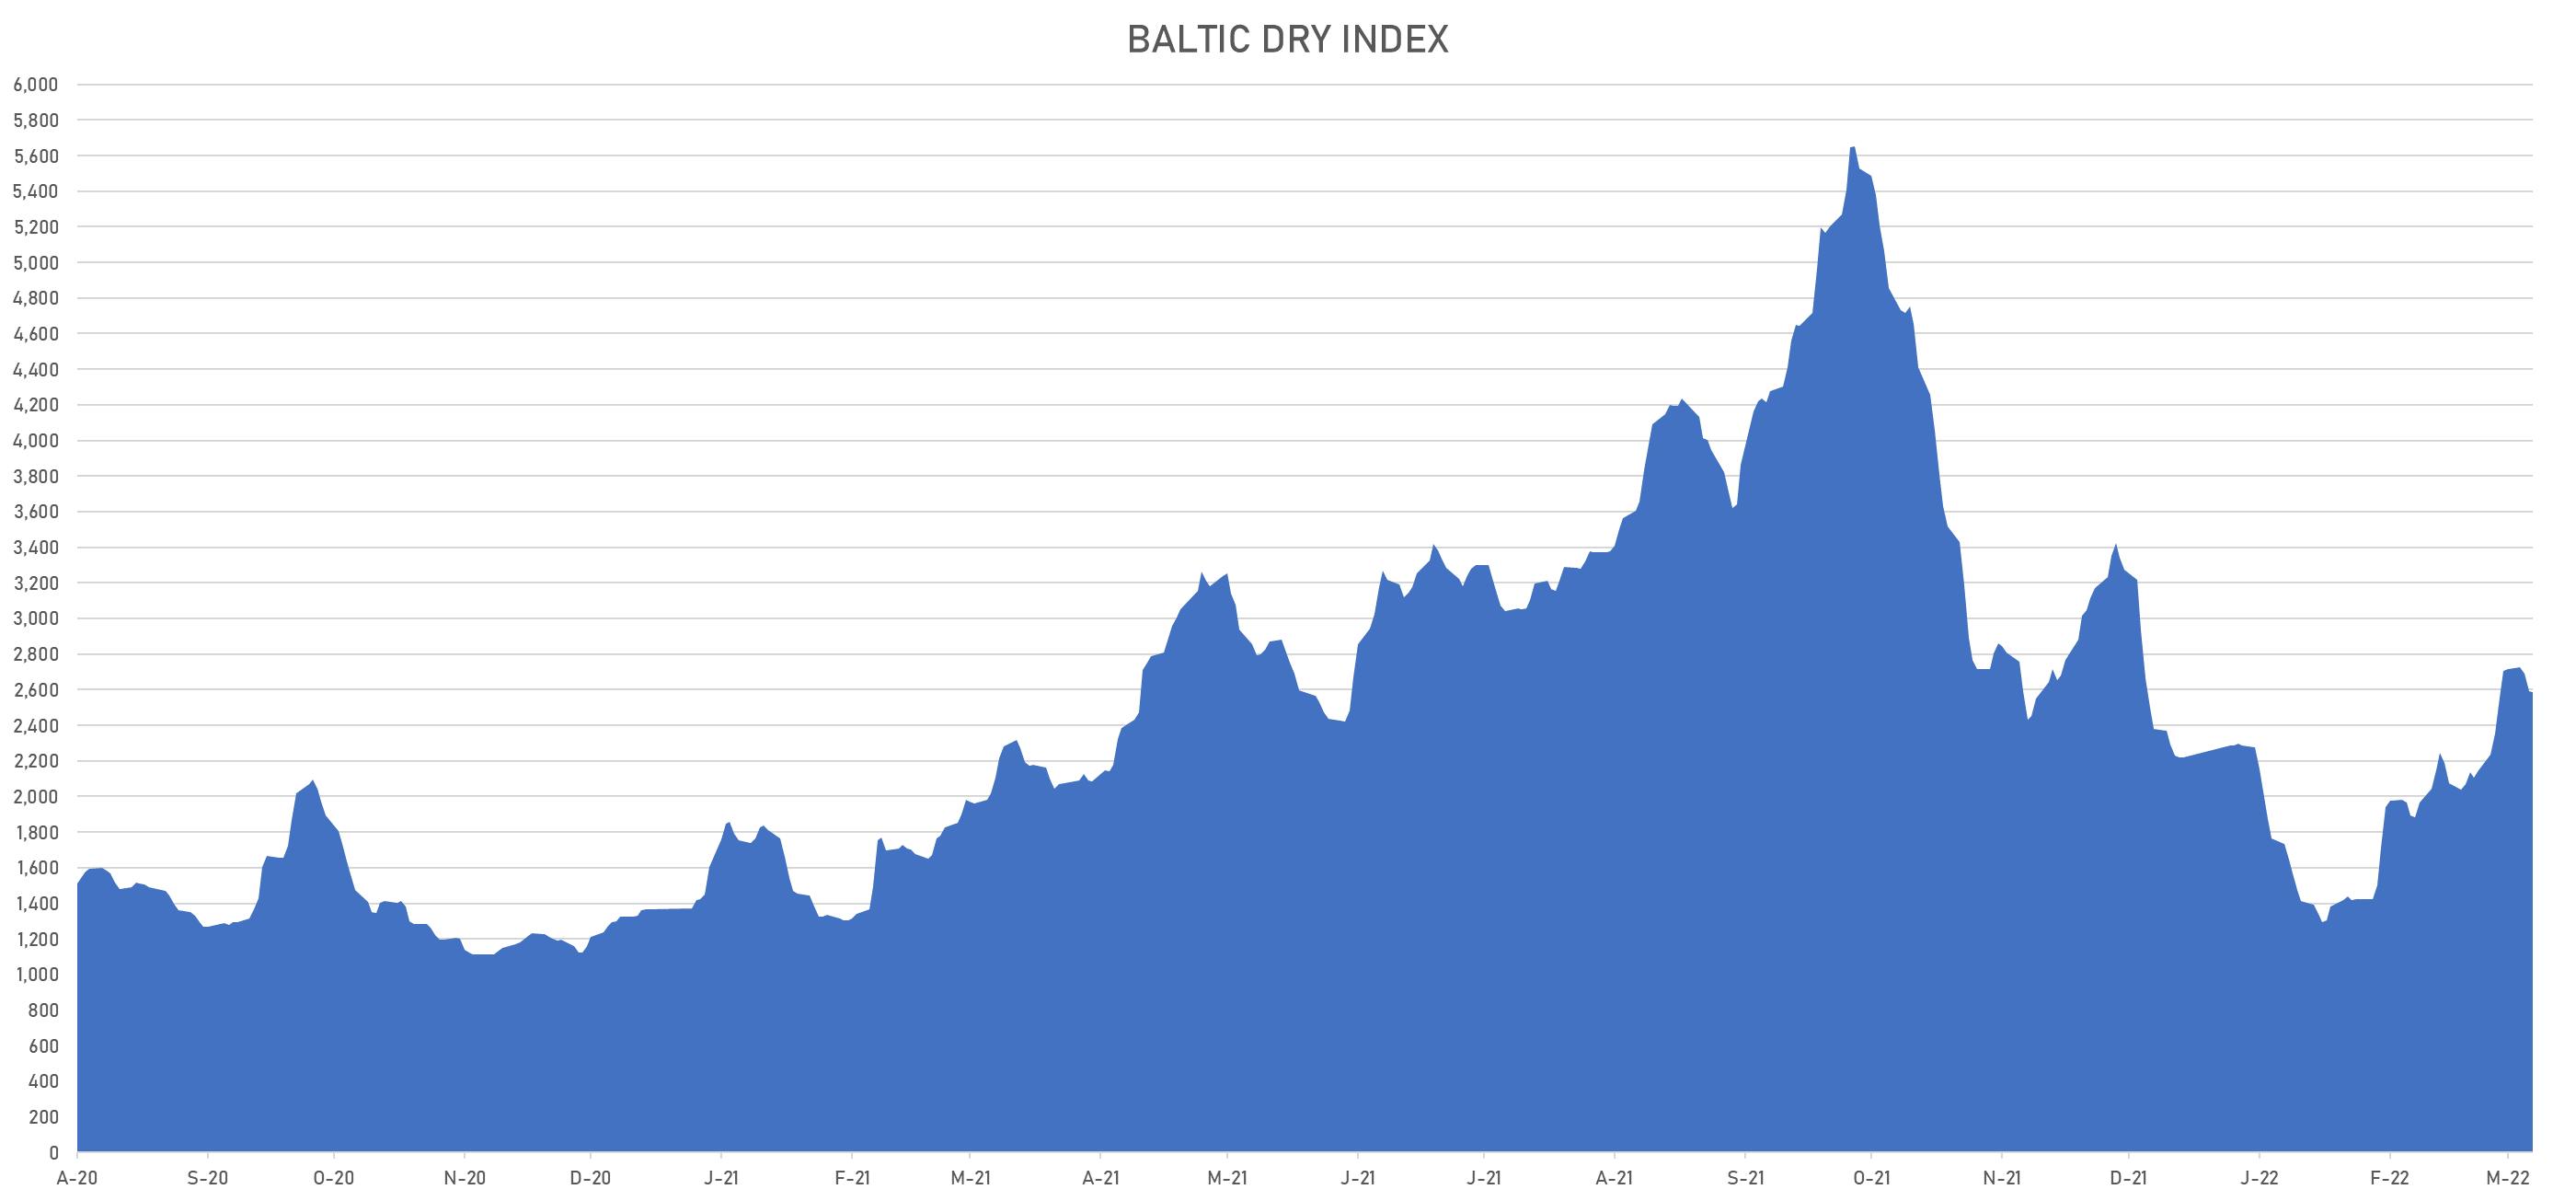 Baltic Dry Index | Sources: phipost.com, Refinitiv data